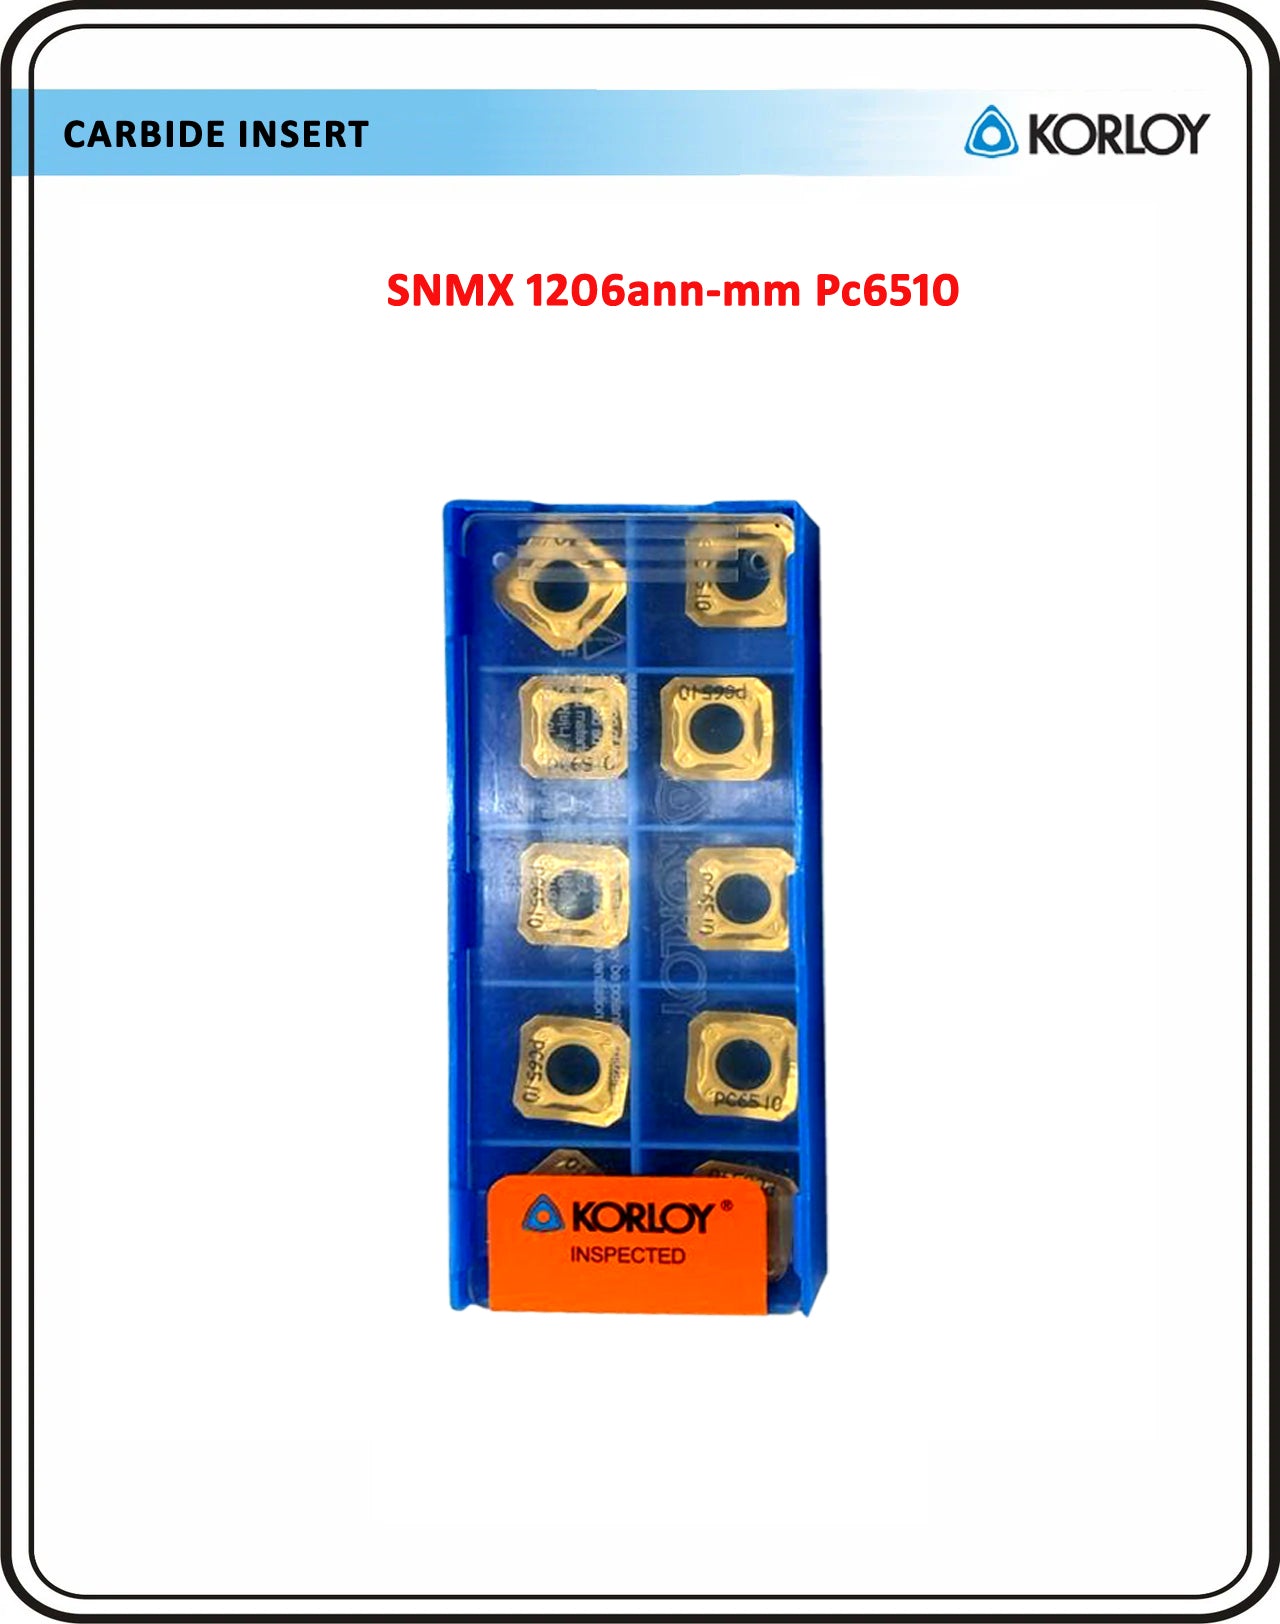 SNMX 1206ann-mm Pc6510